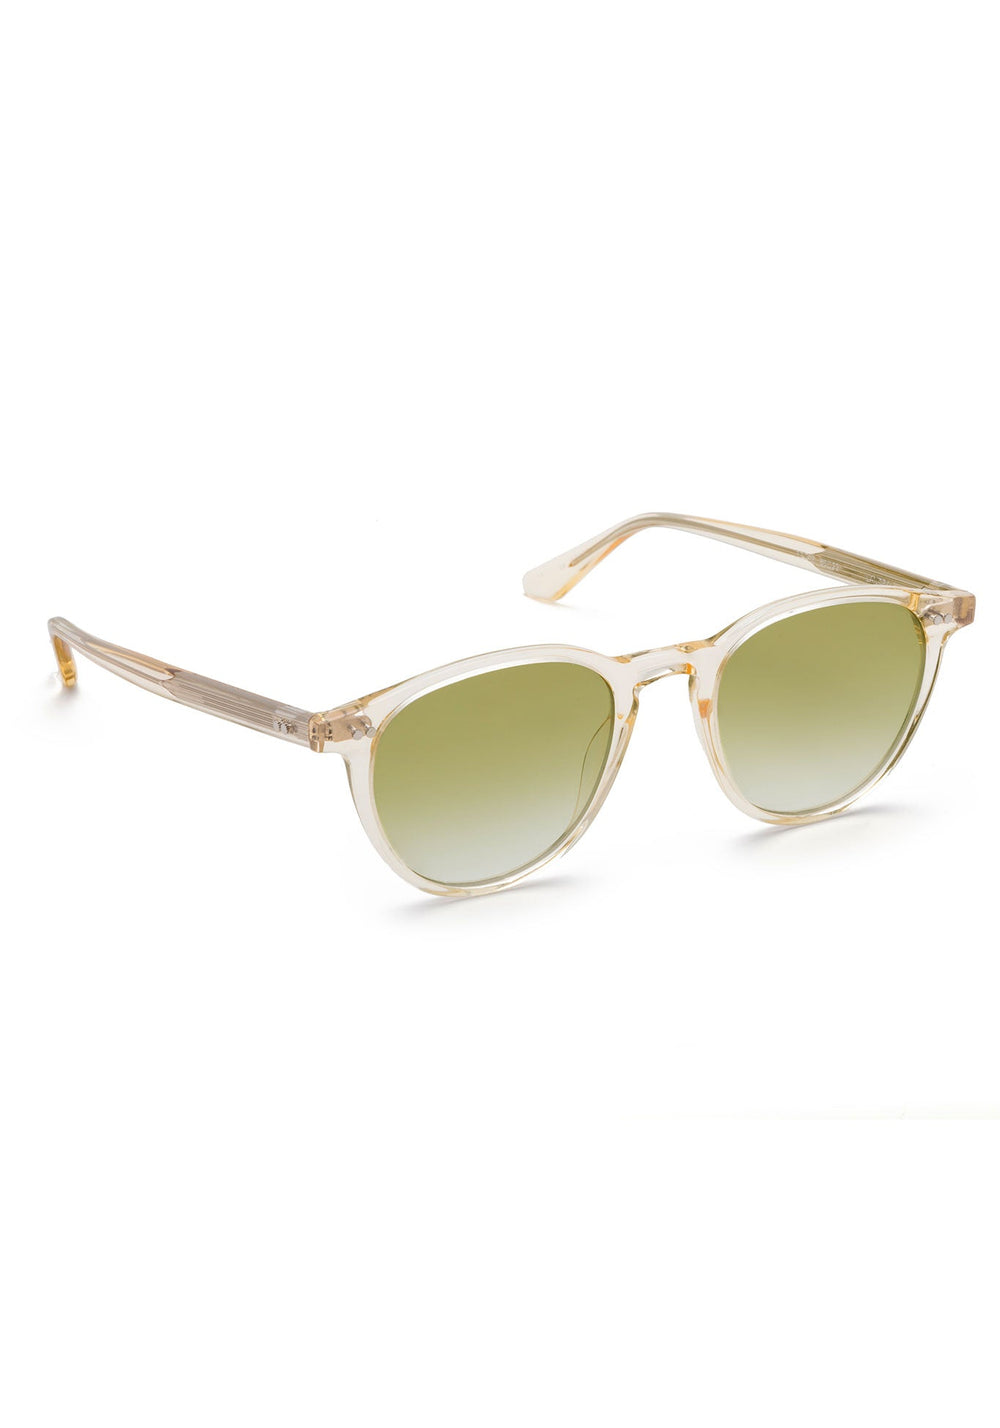 KREWE SUNGLASSEES - LANDRY | Haze + Custom Vanity Tint handcrafted, luxury yellow sunglasses with custom green gradient tinted lenses